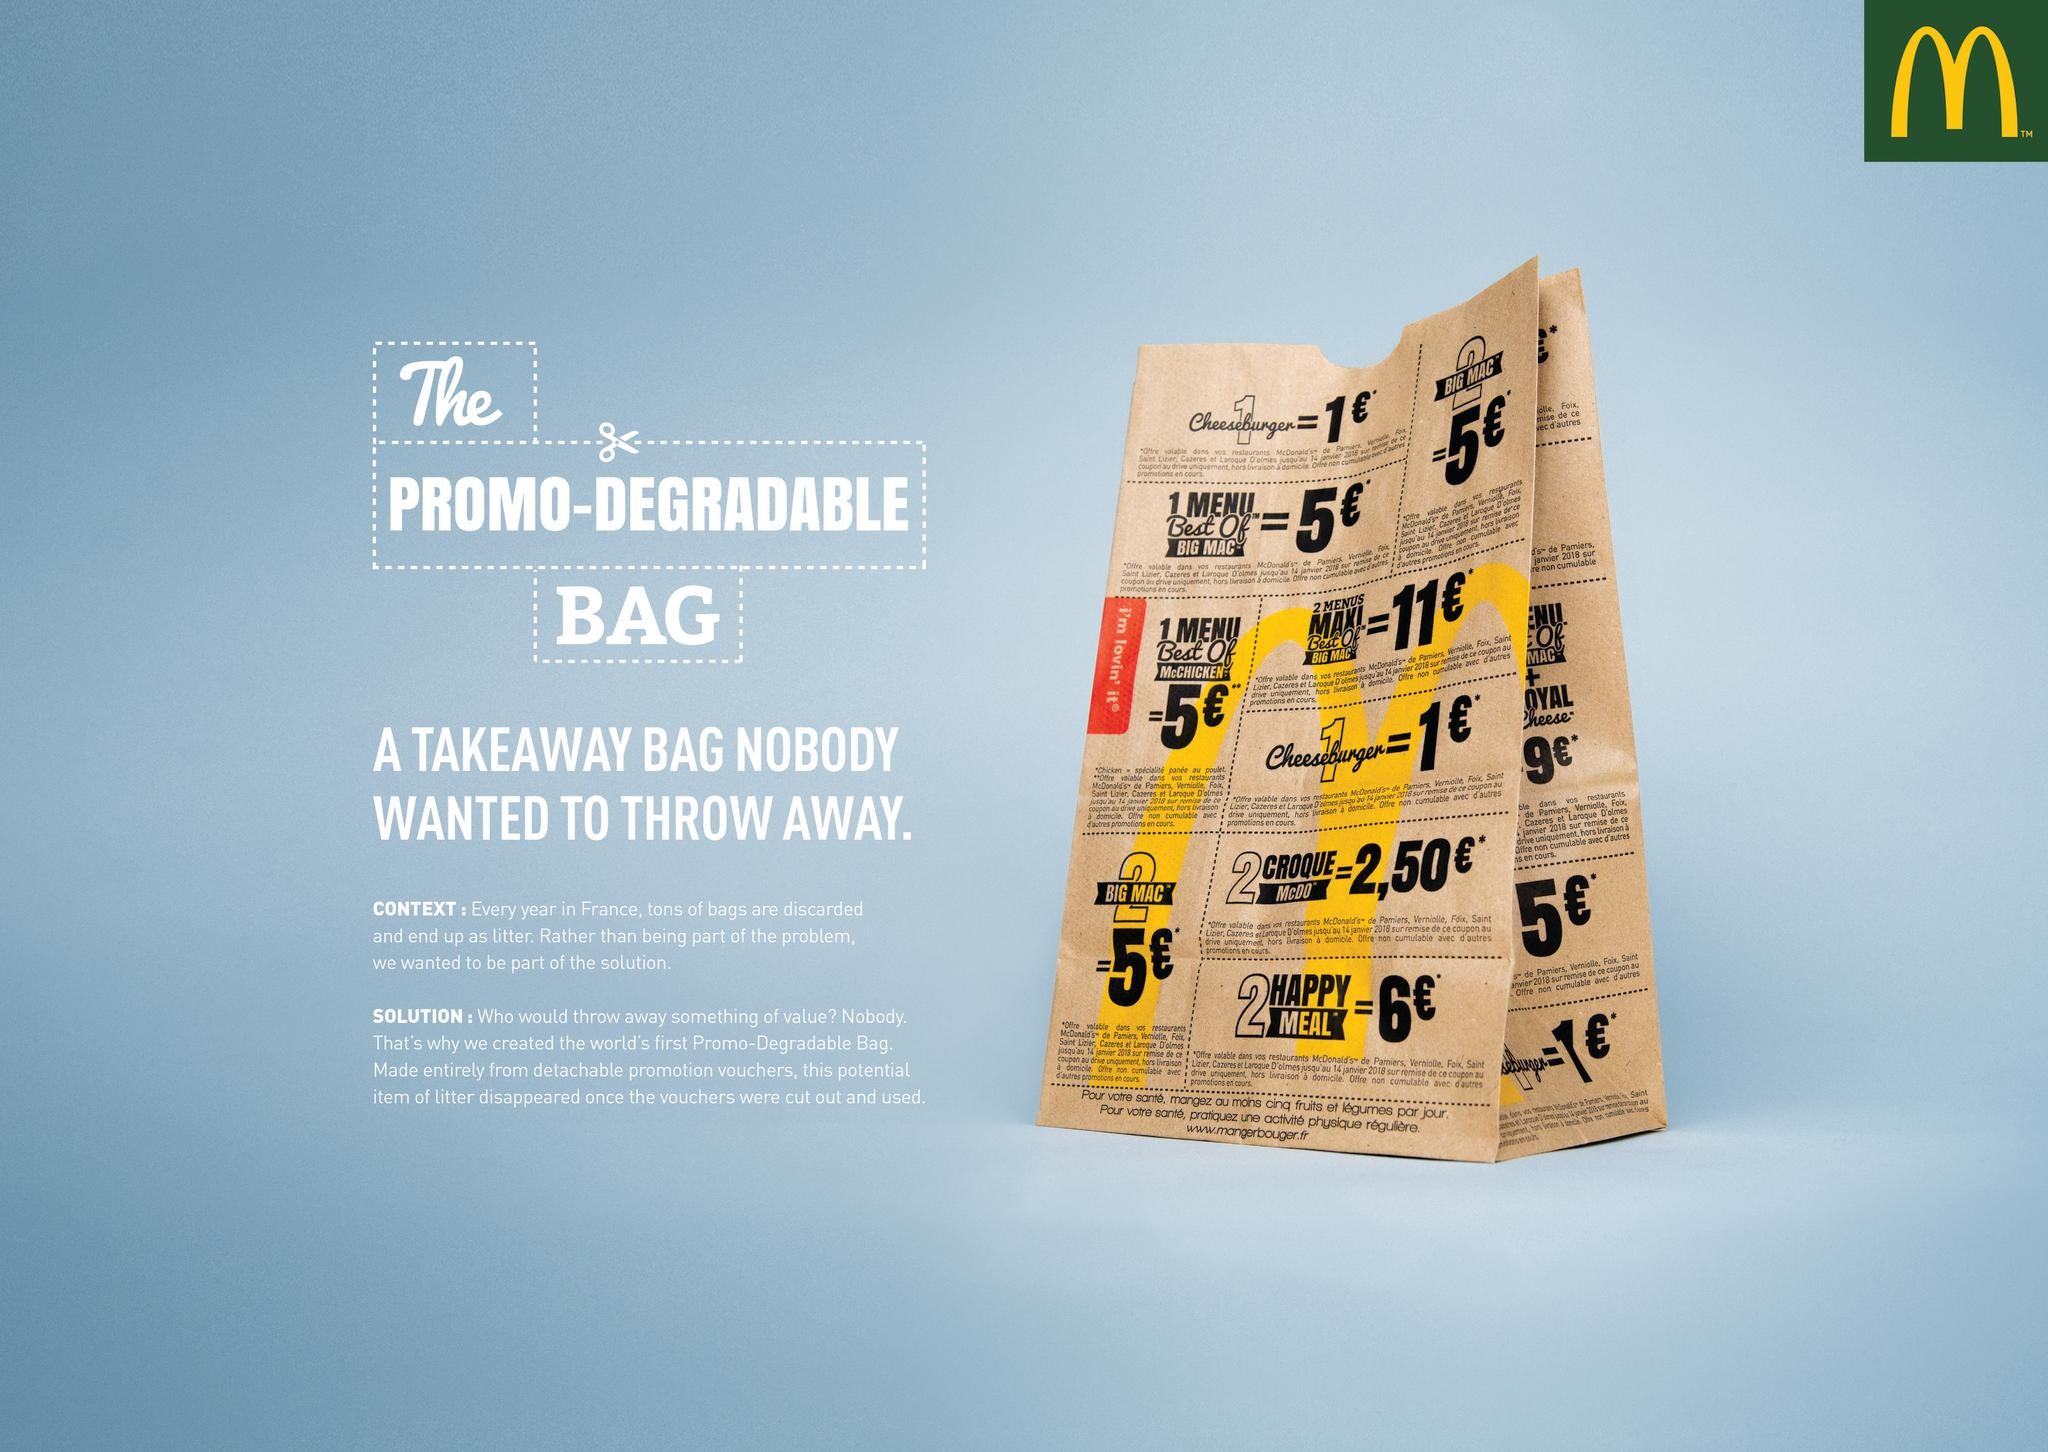 The Promo-Degradable Bag